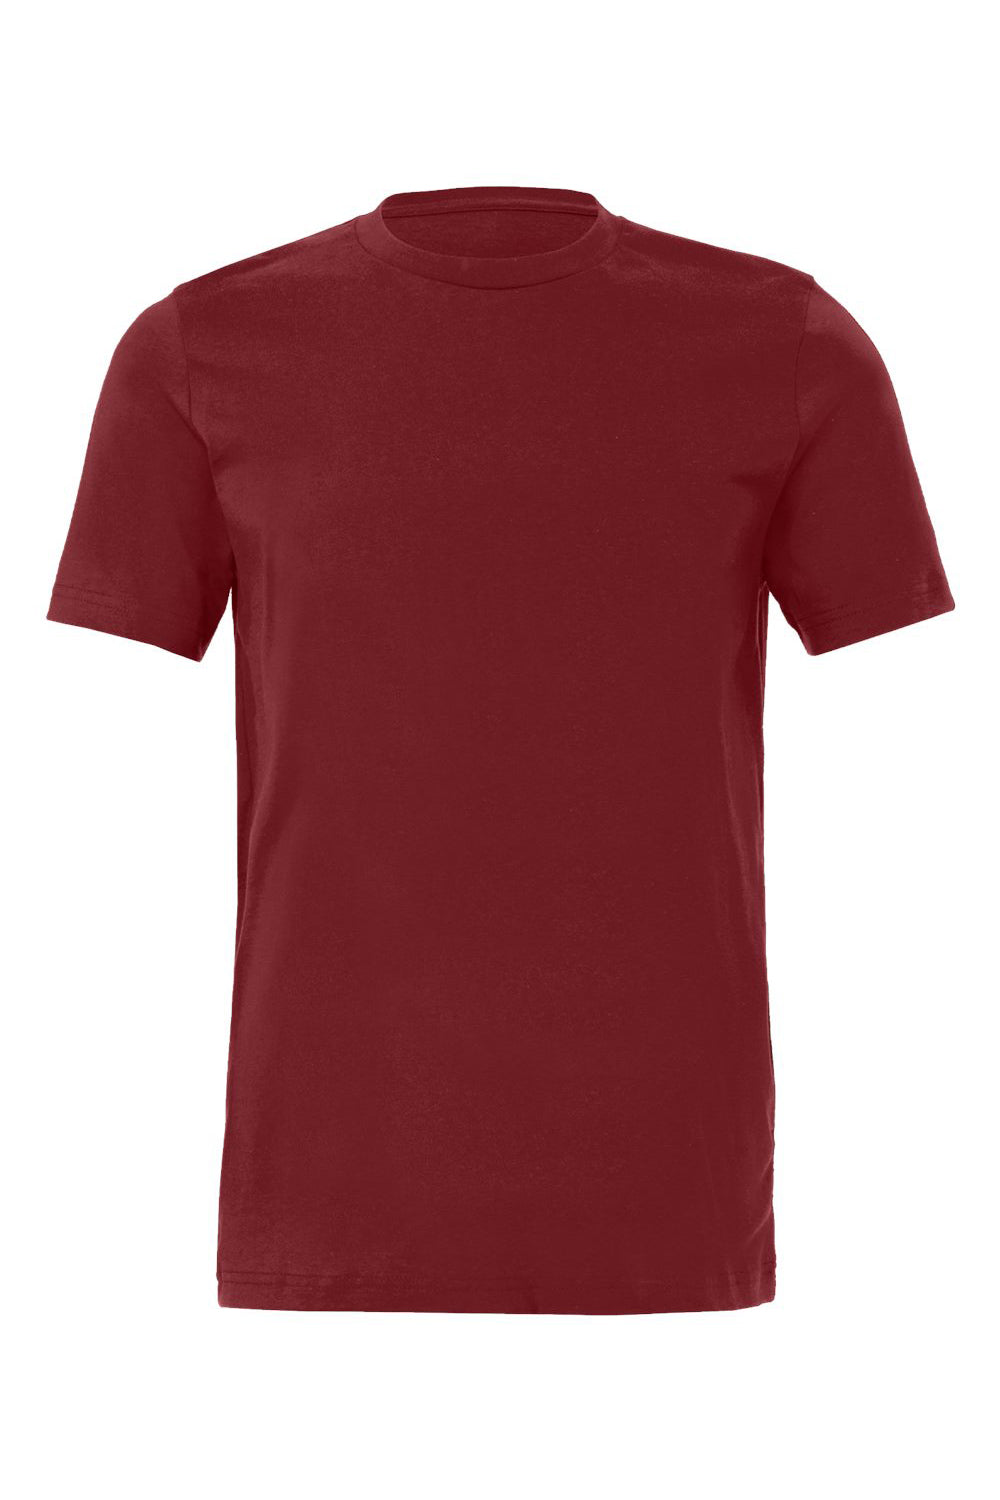 Bella + Canvas BC3001/3001C Mens Jersey Short Sleeve Crewneck T-Shirt Cardinal Red Flat Front